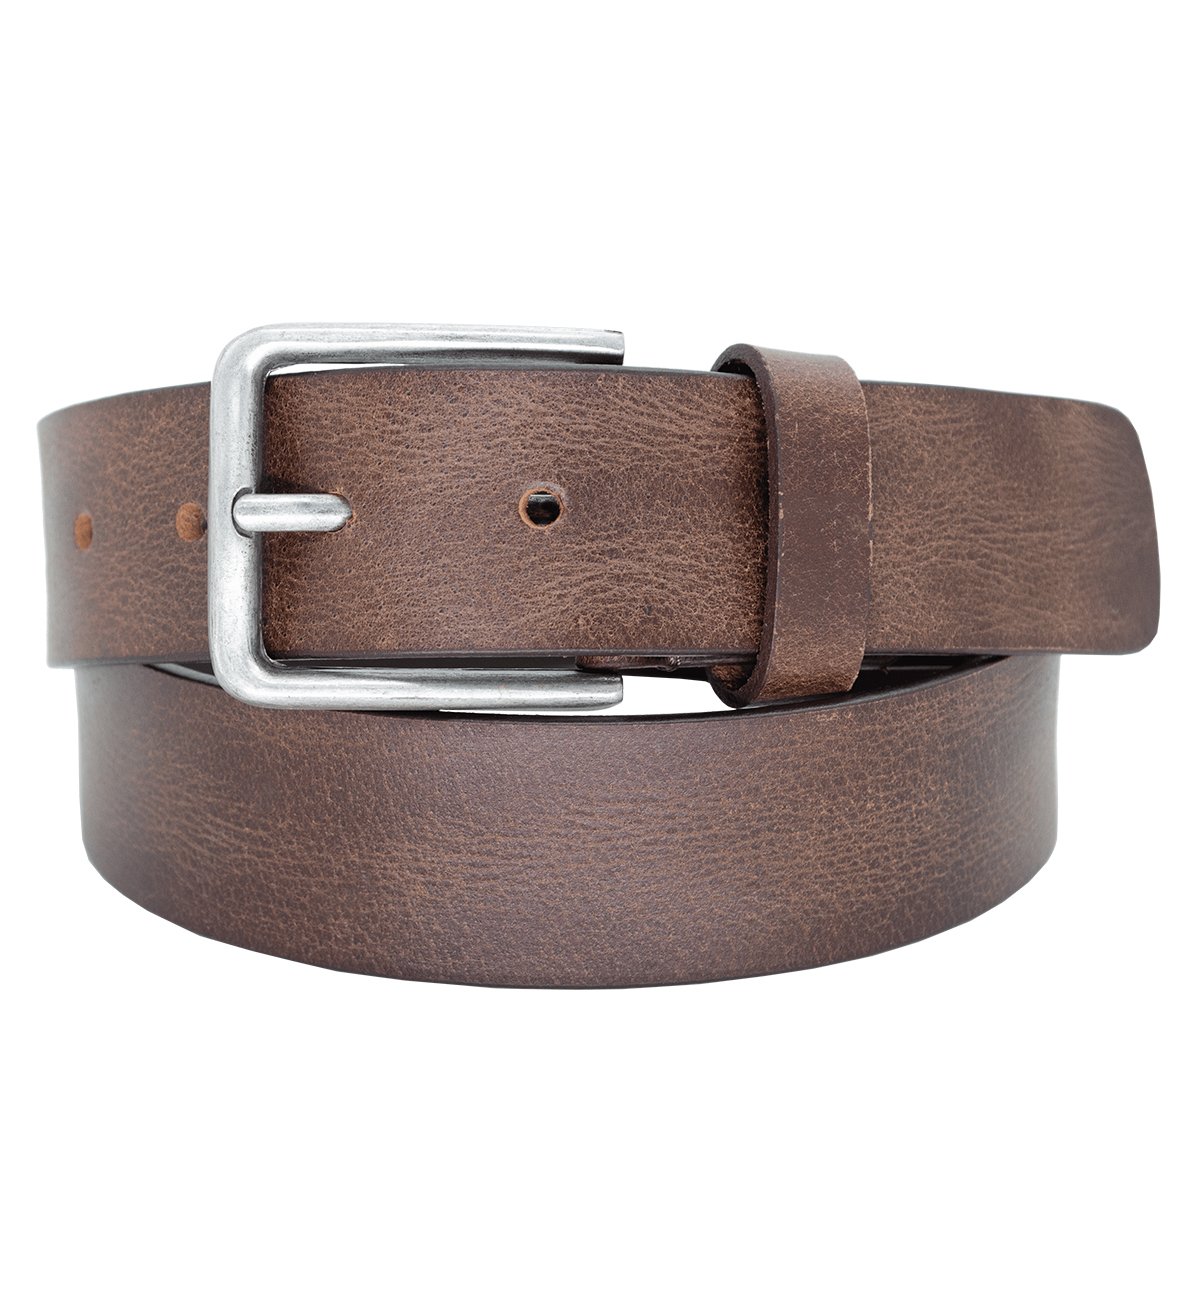 Men's Genuine Leather Belt with Antique Silver Buckle - #BT-1548